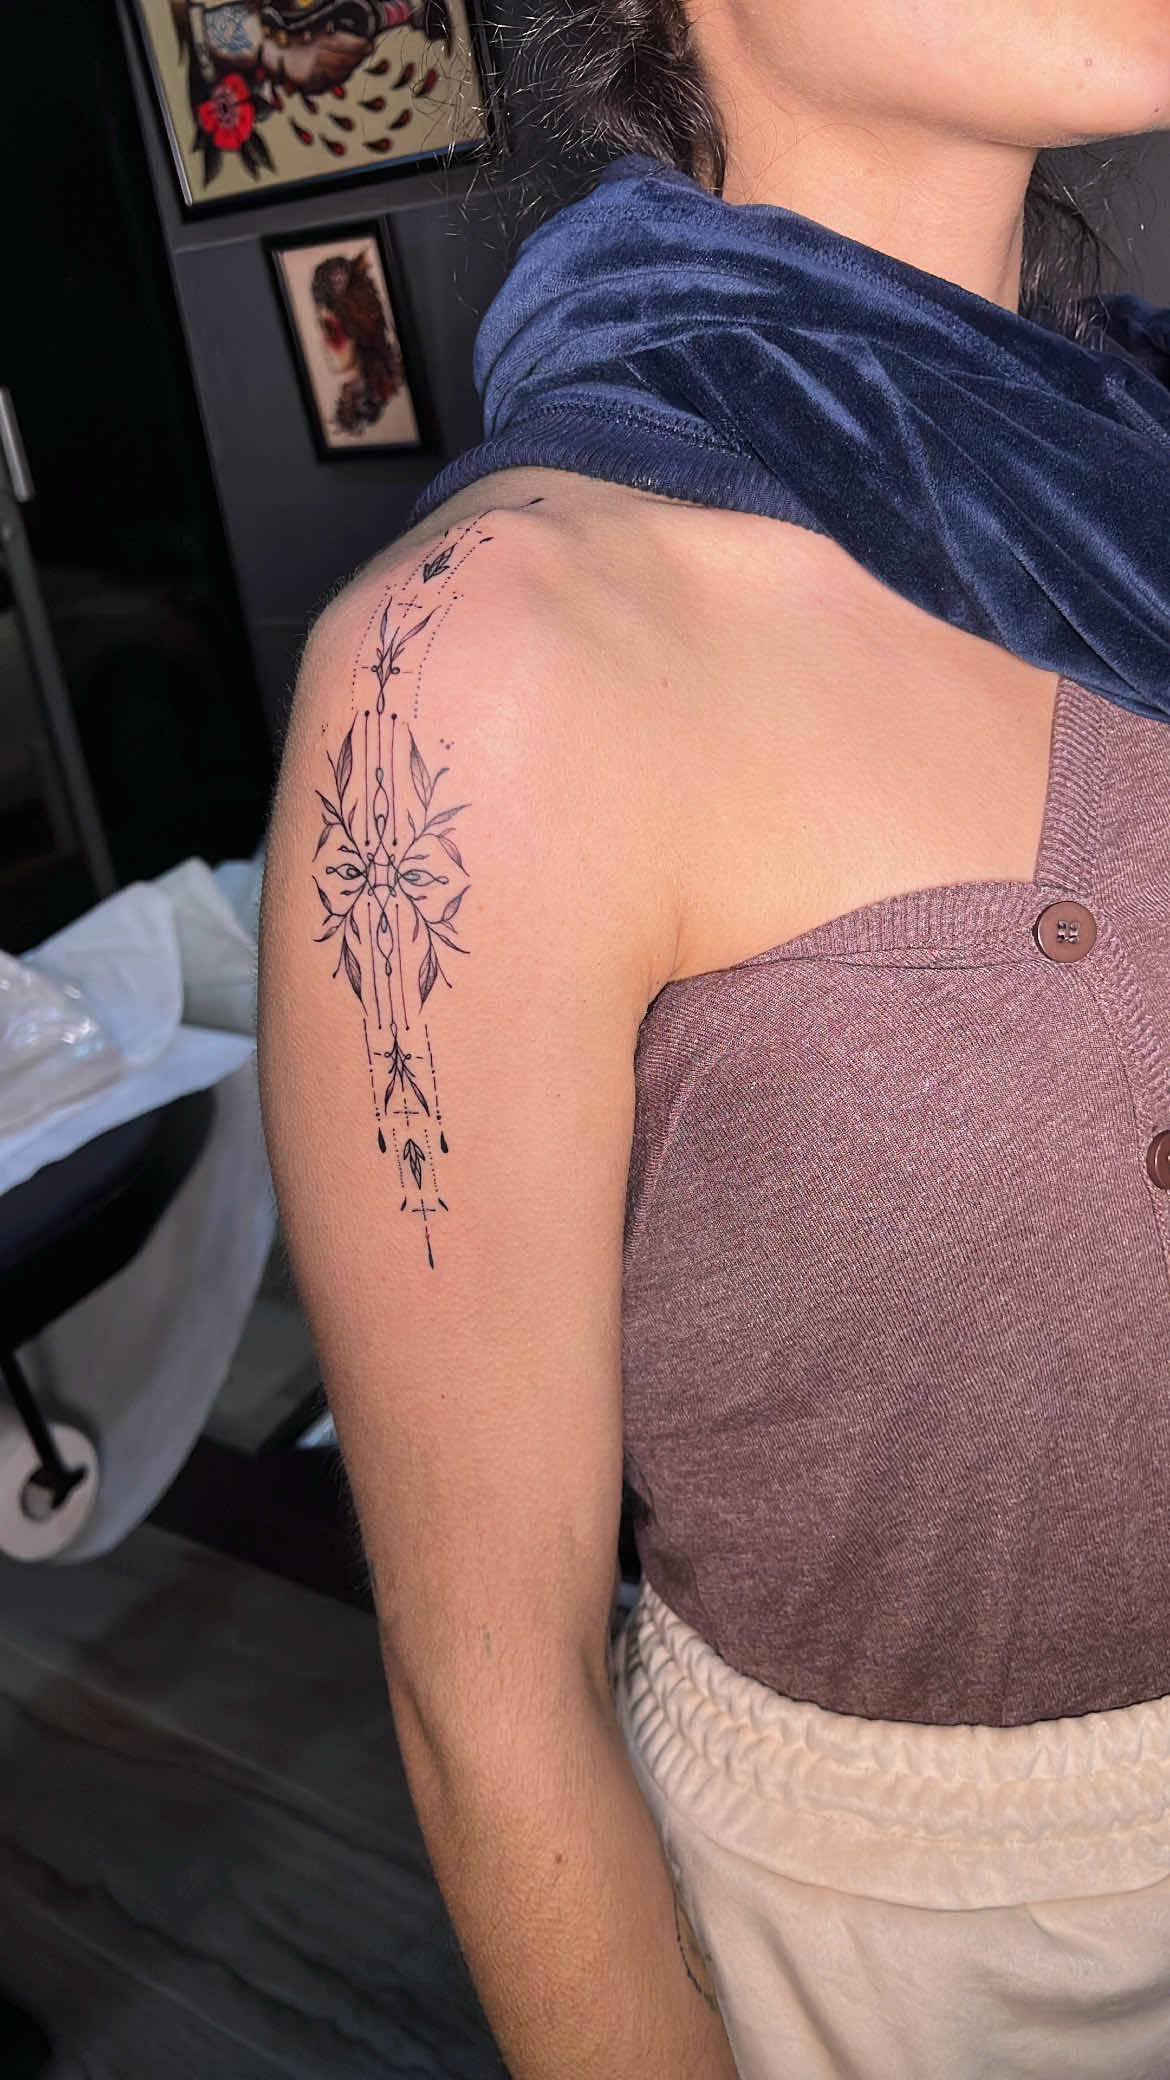 Healed #mandala #ornamental #tattoo photo by client. | Flickr